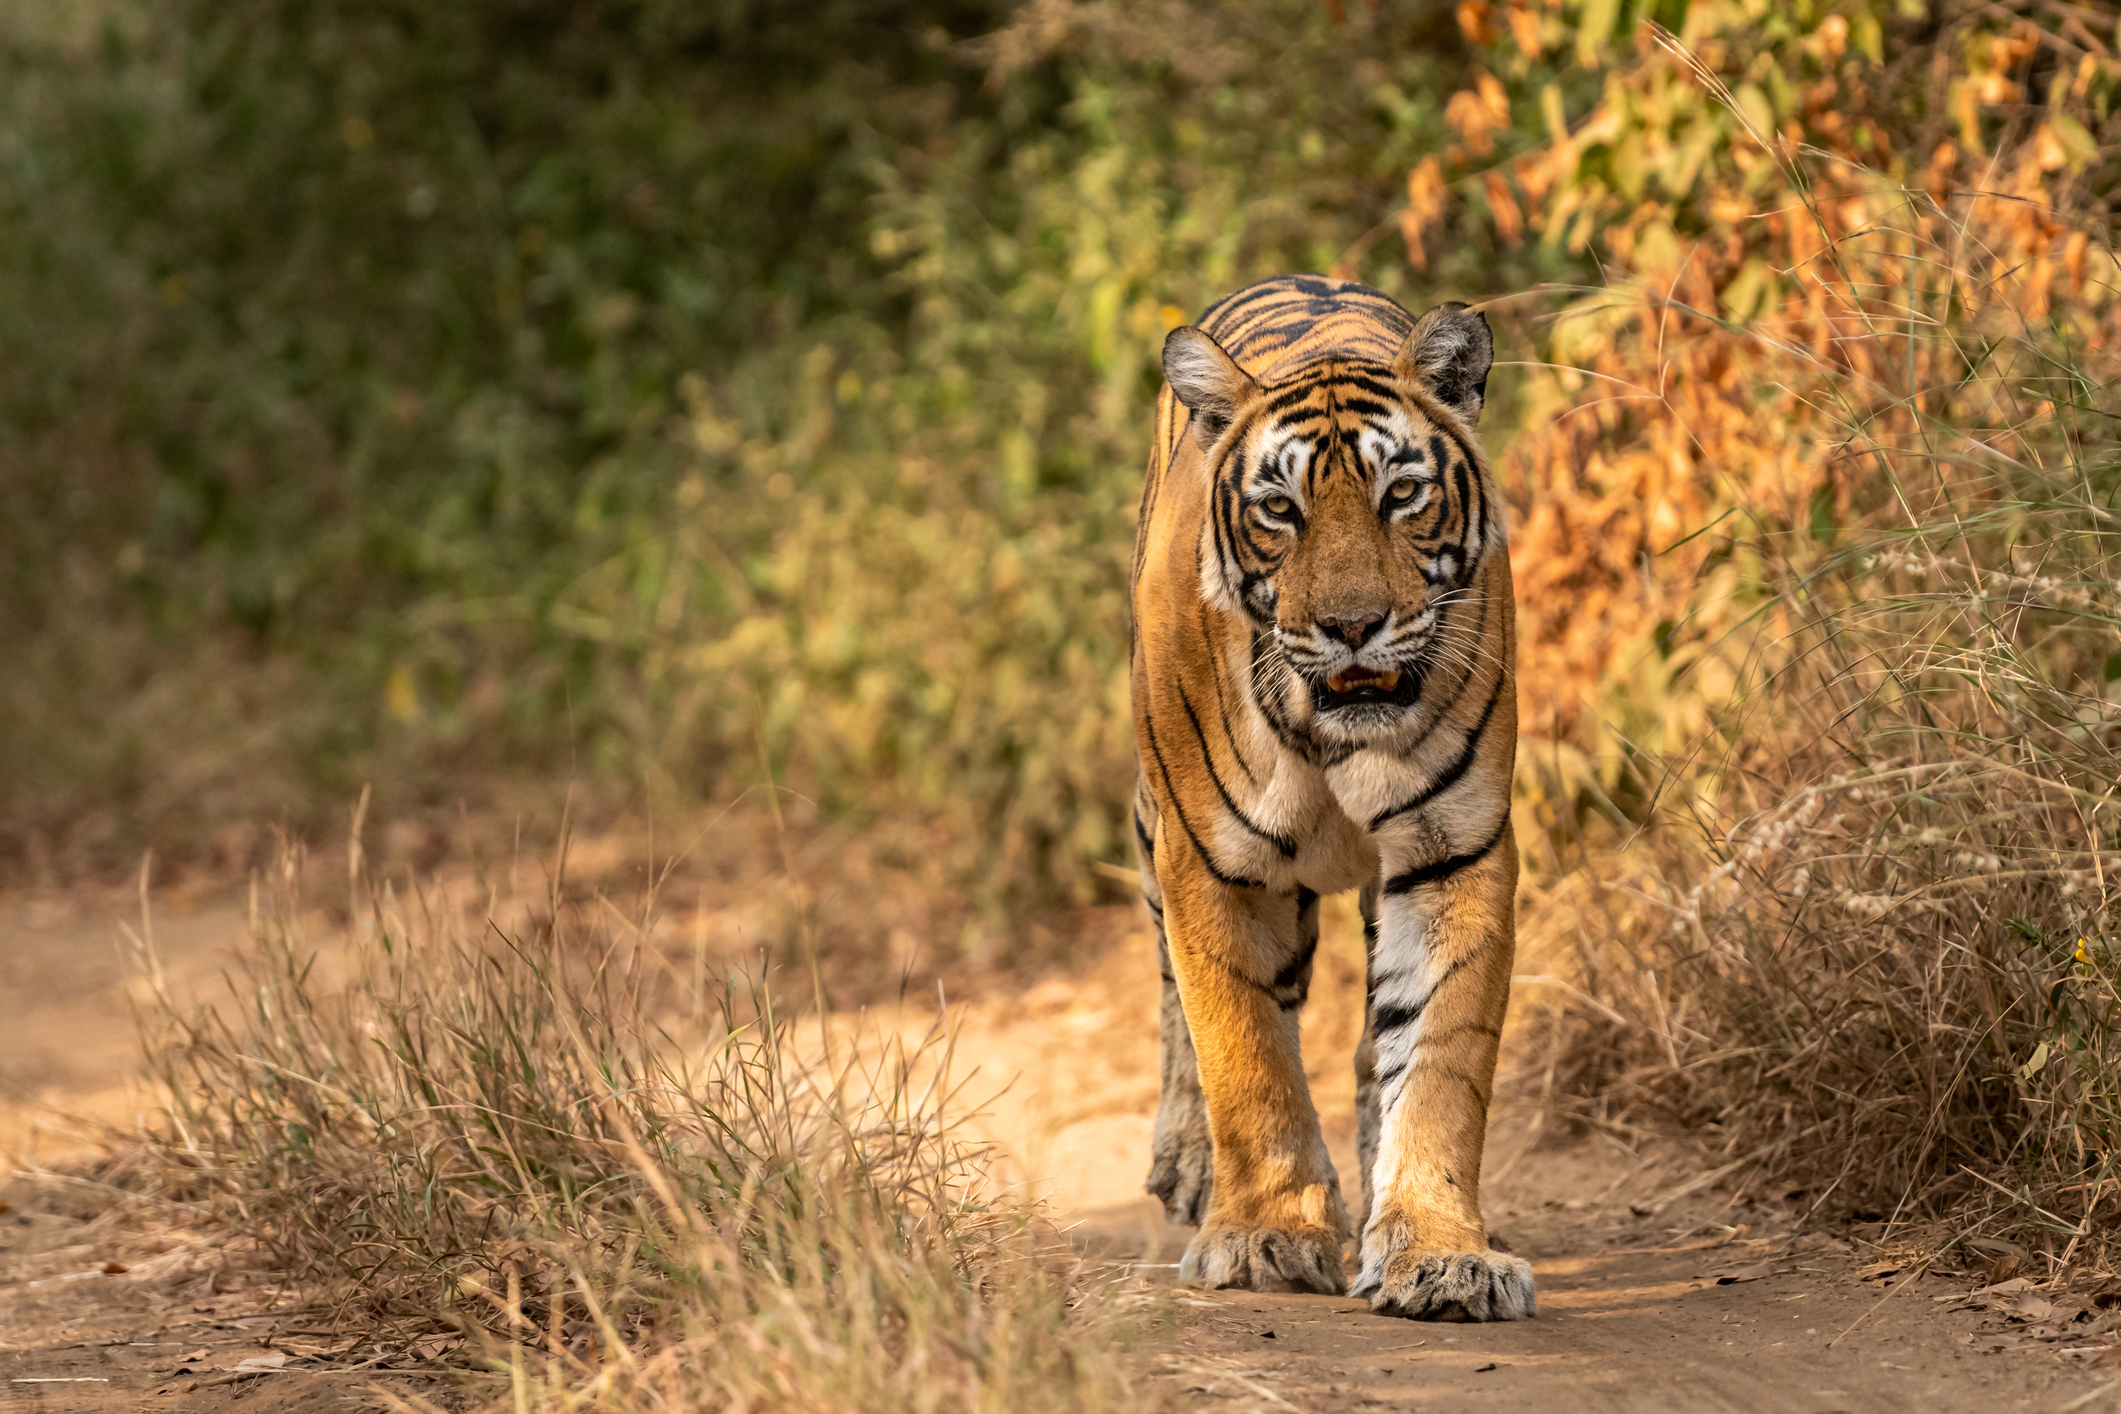 Tiger of Ranthambore